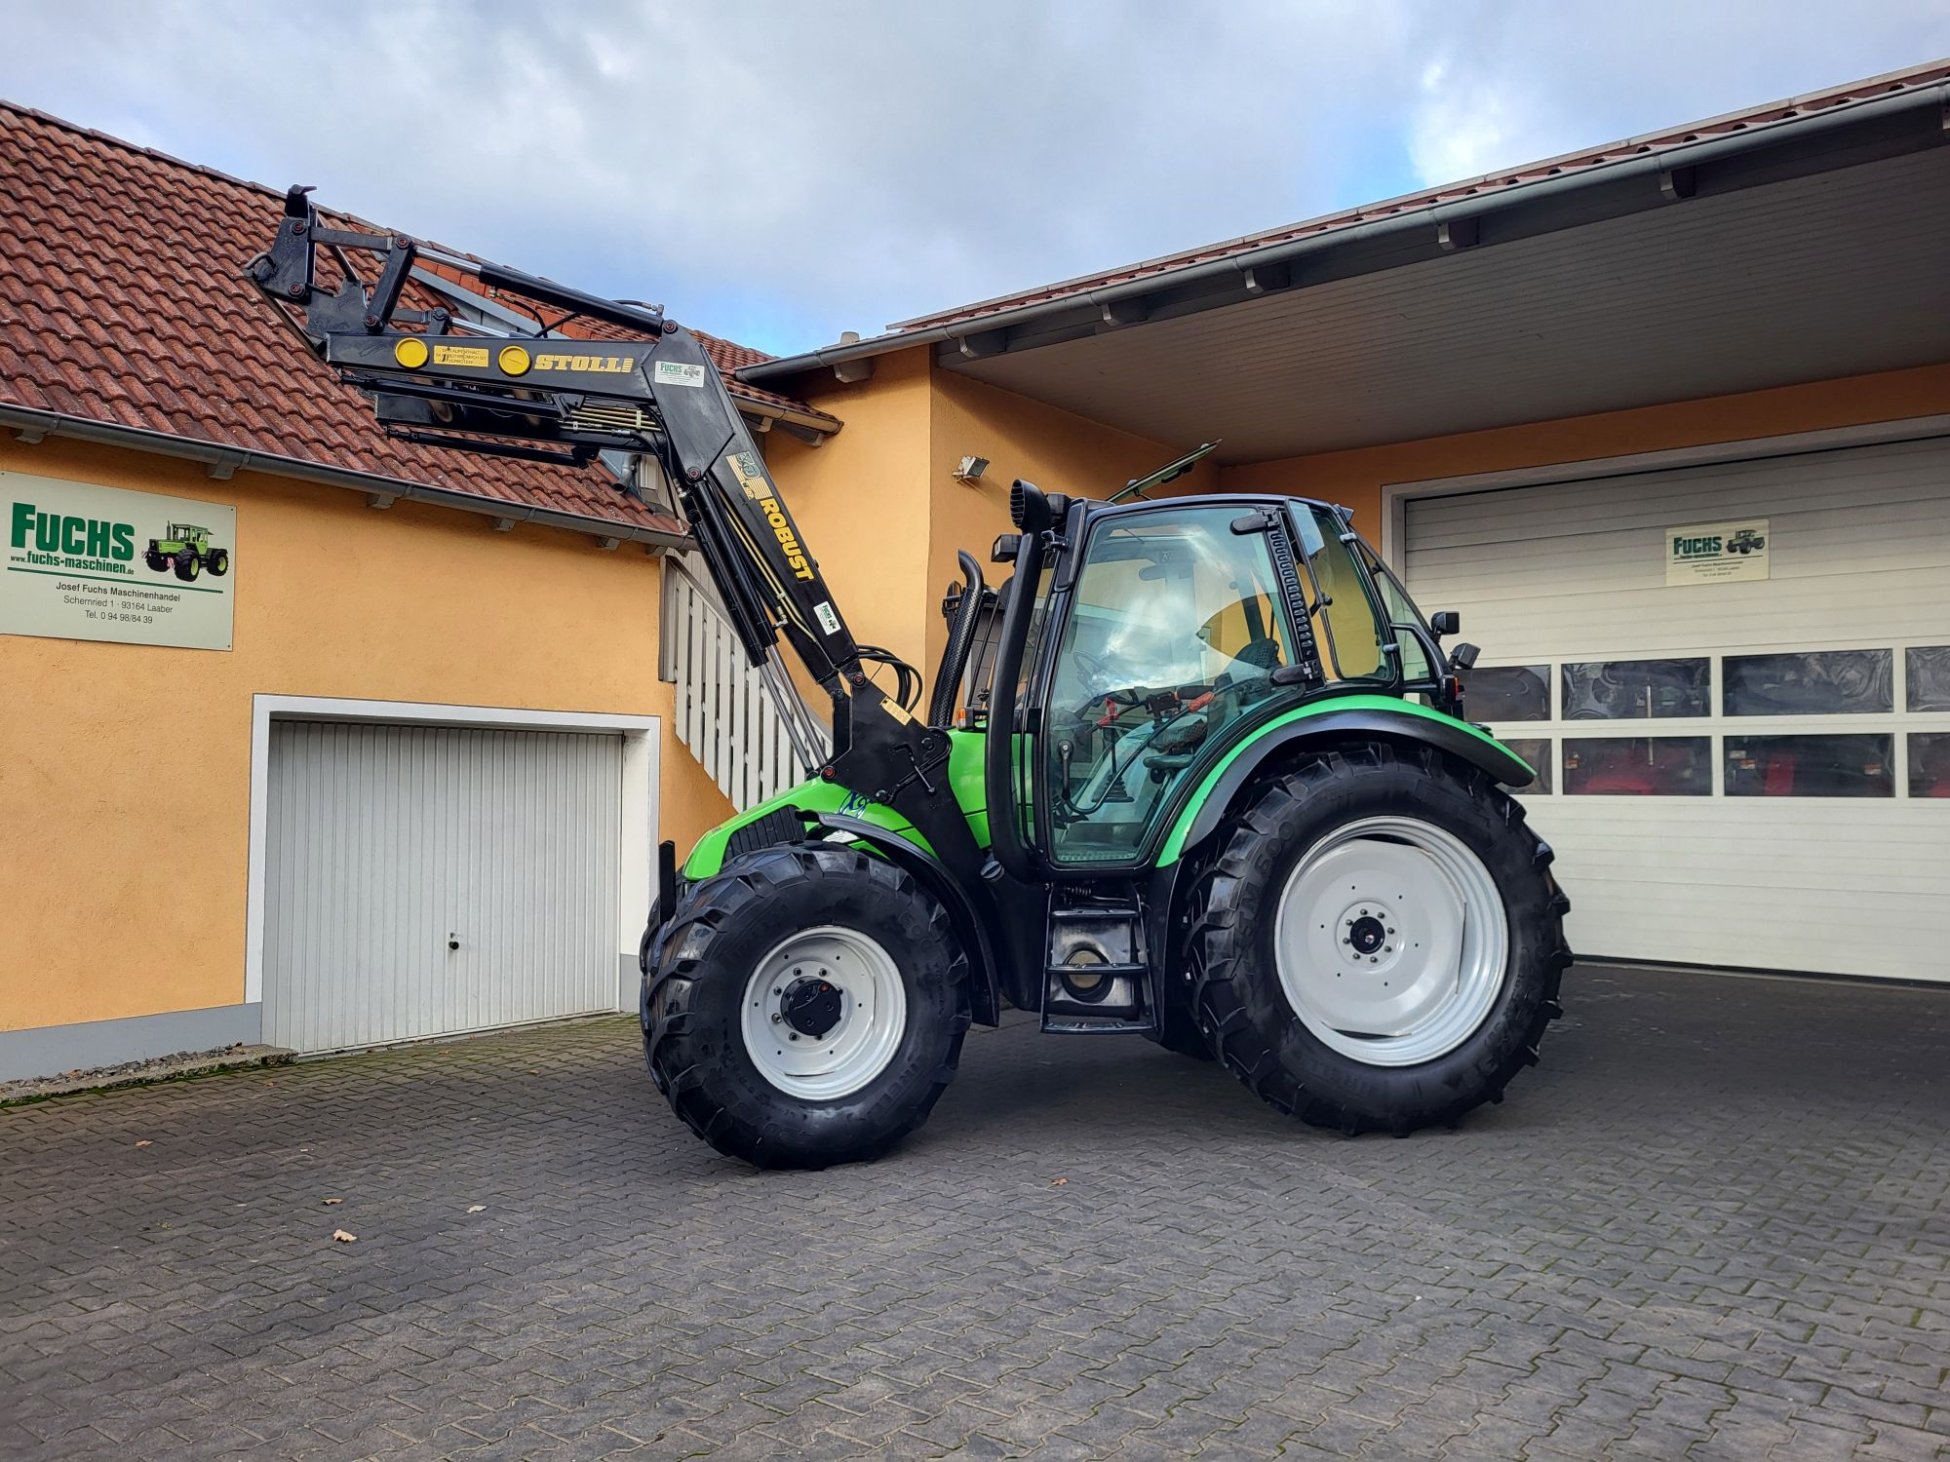 Fuchs Maschinenhandel Landmaschinen Traktor Laaber bei Regensburg